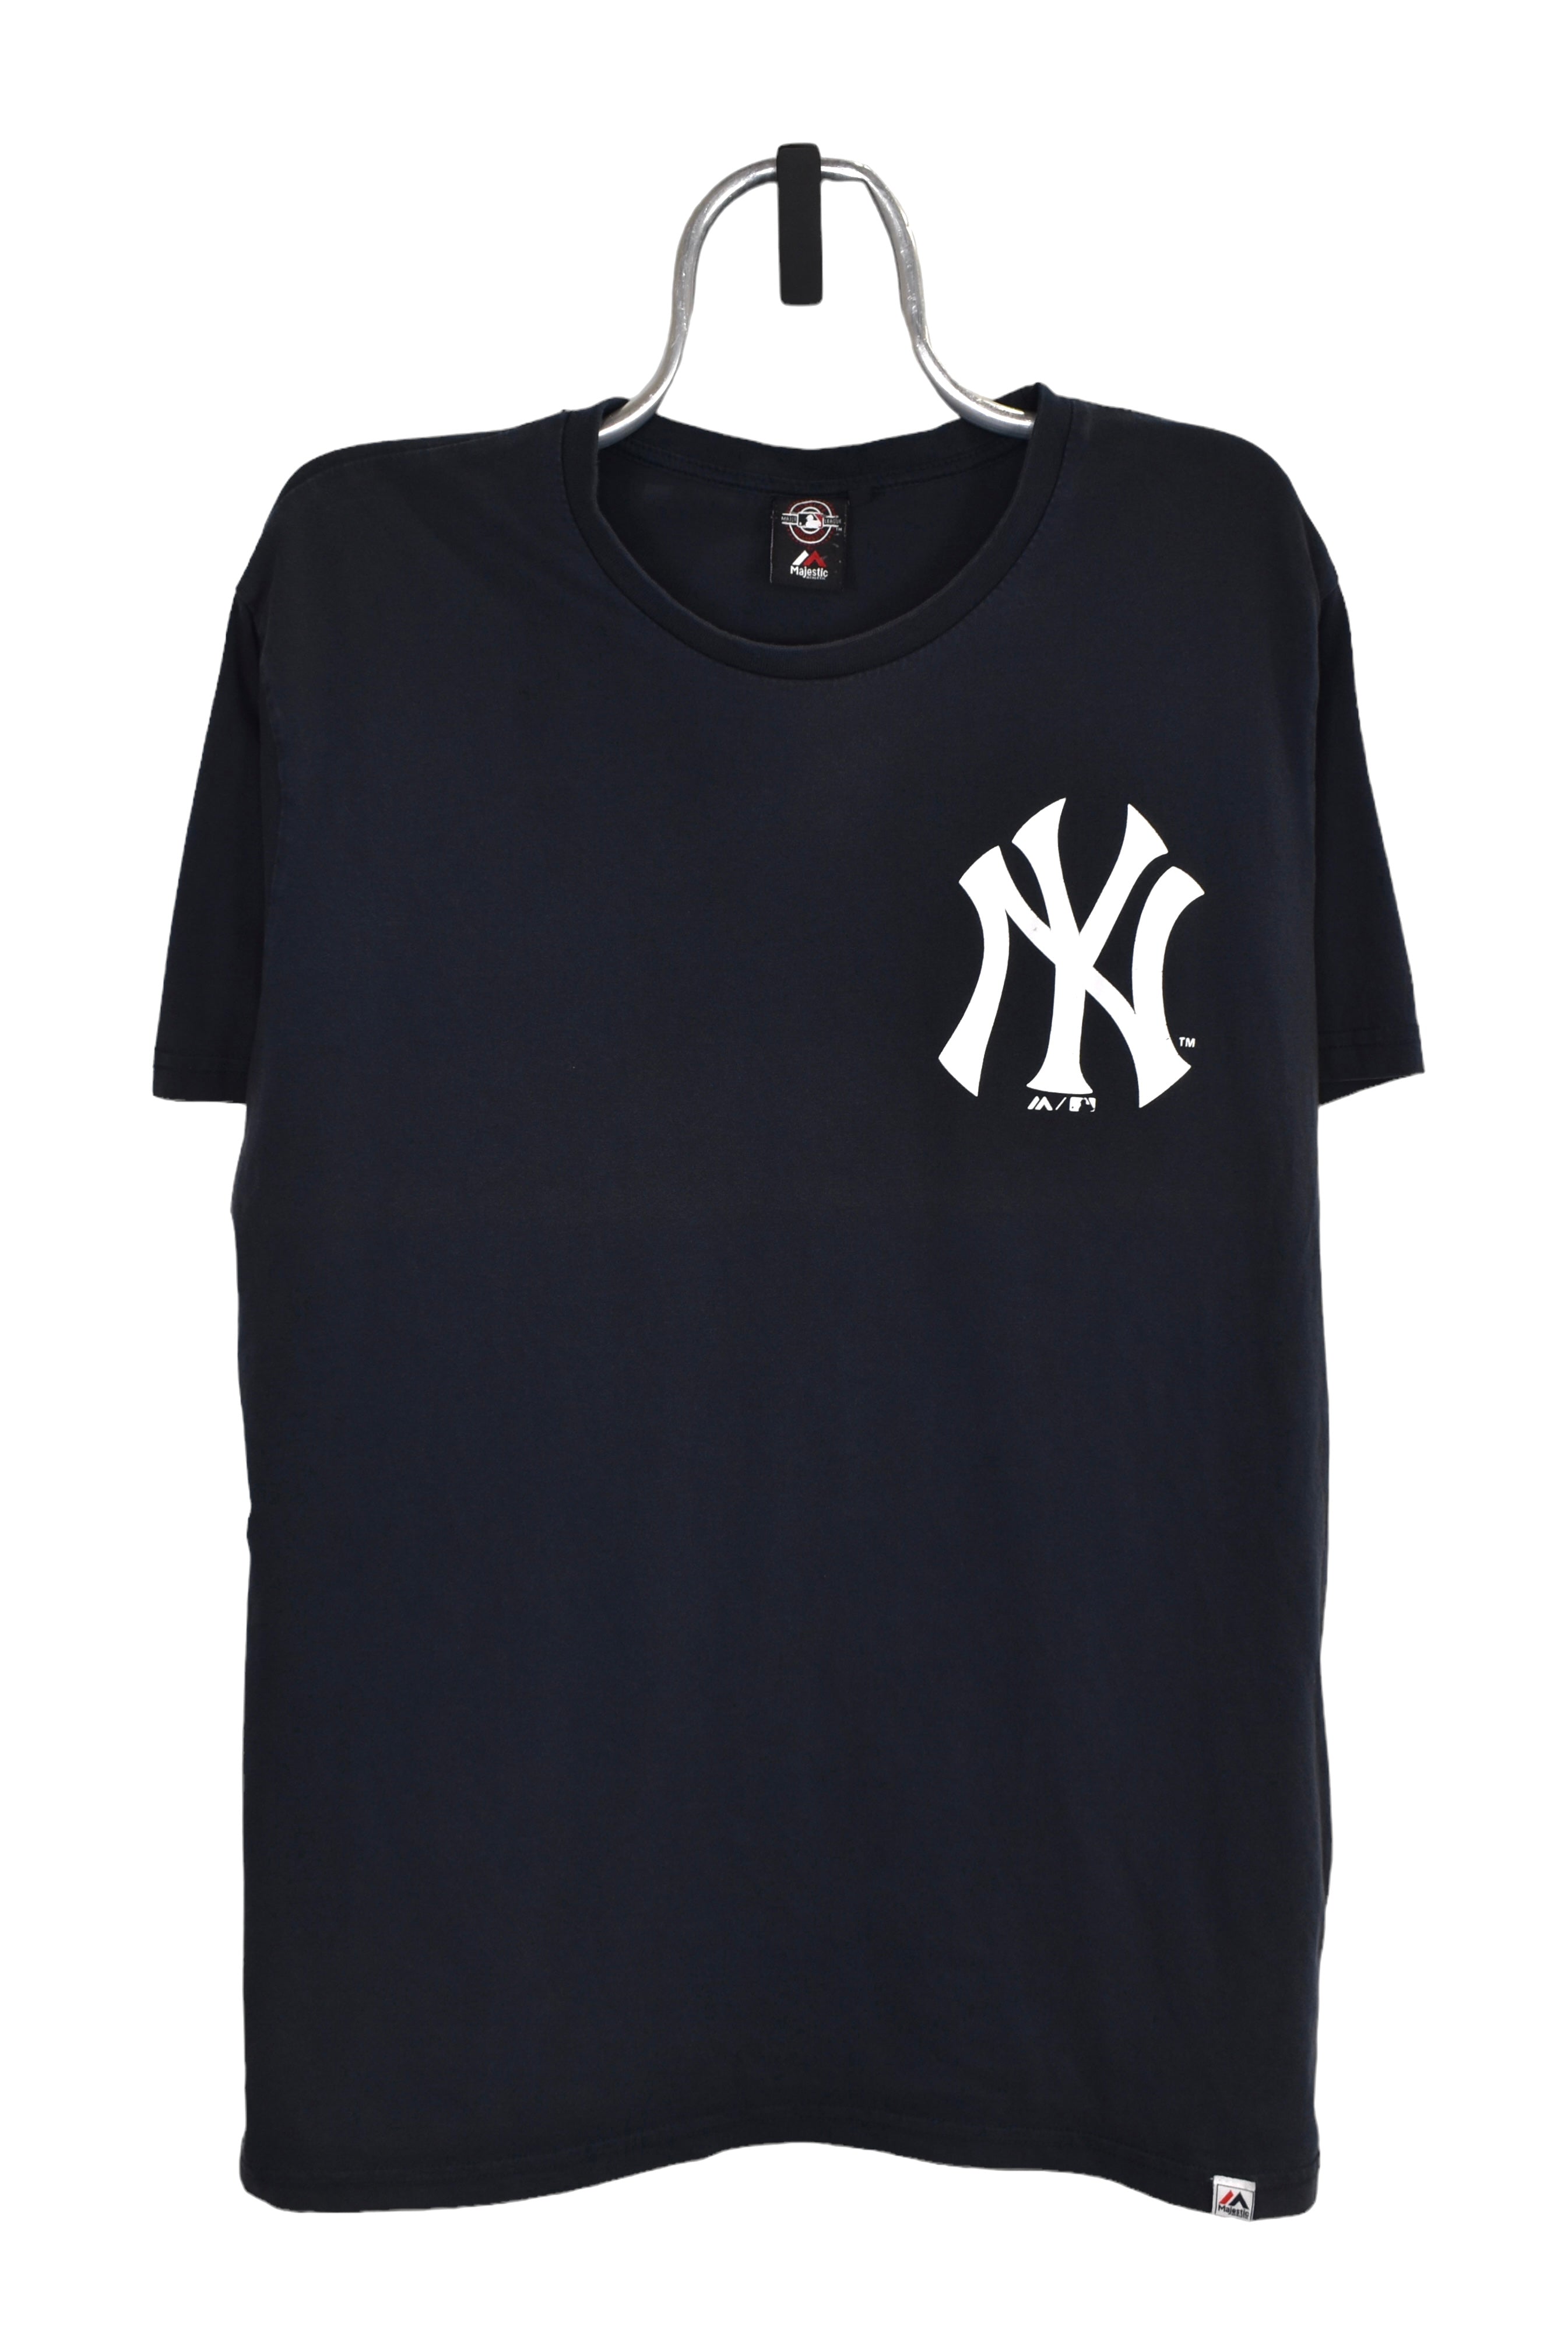 Vintage New York Yankees shirt (XL), black MLB graphic tee